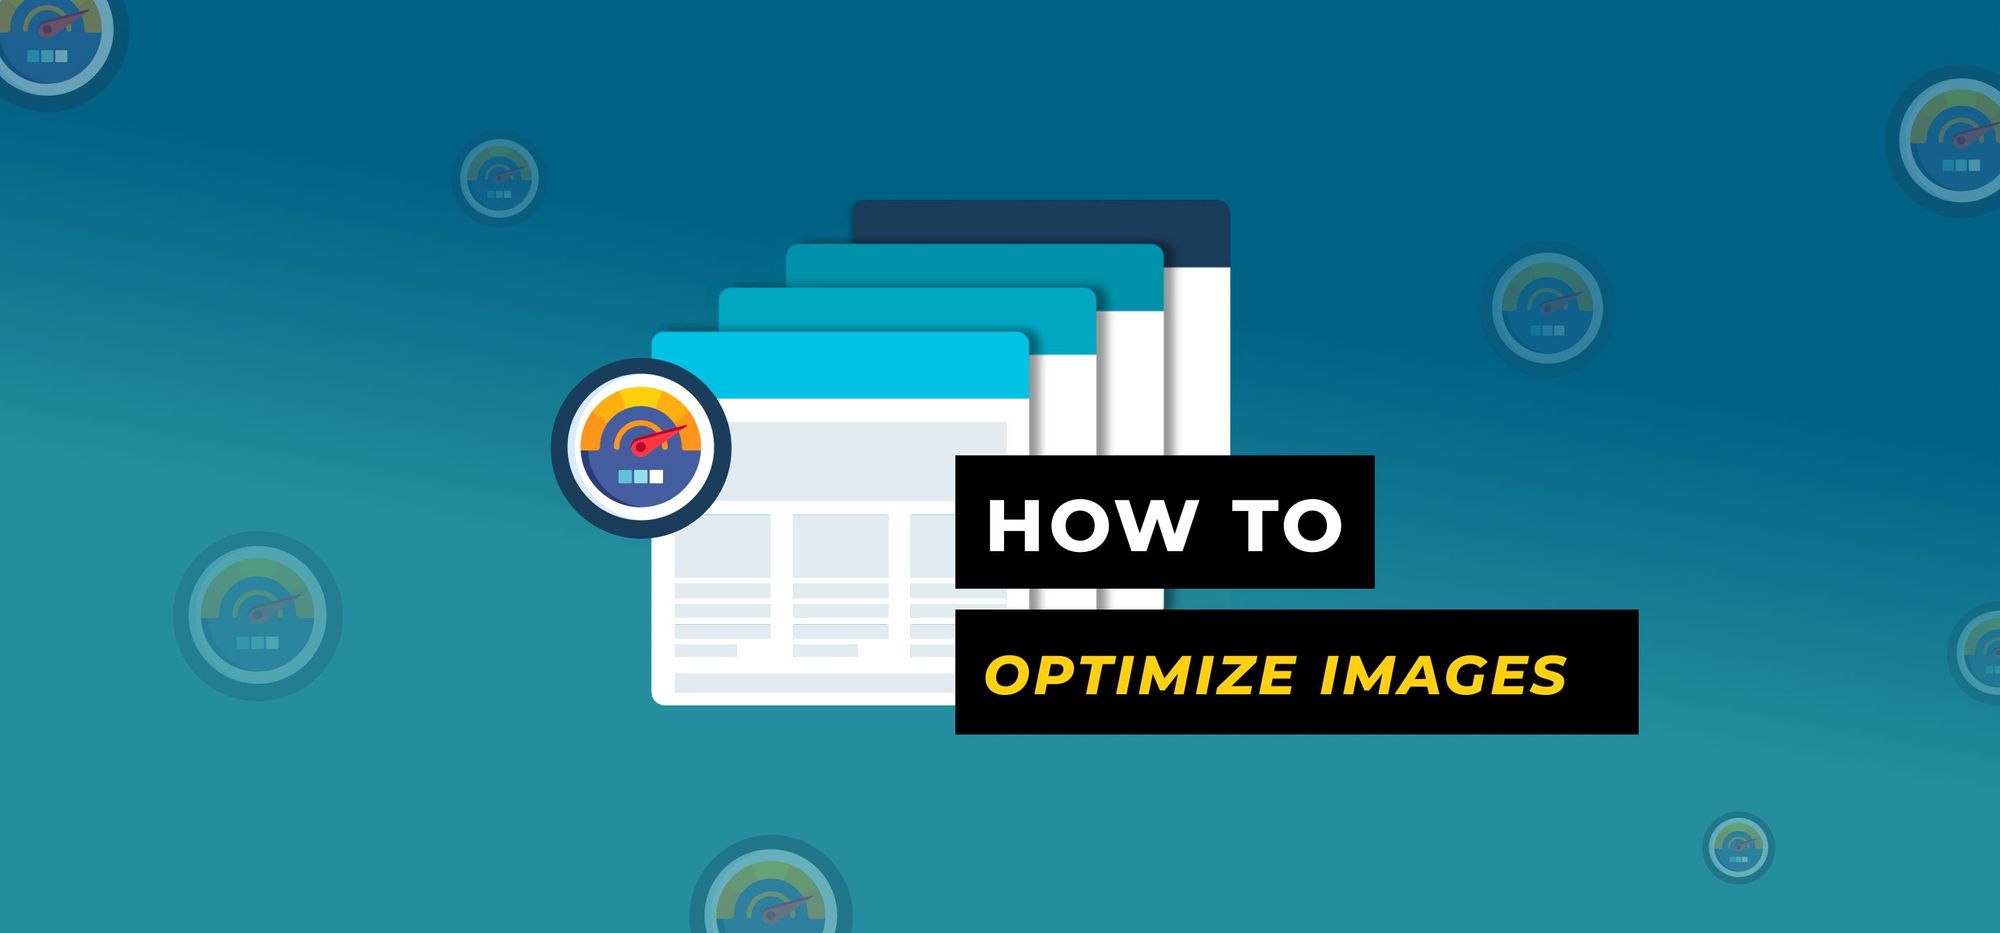 optimize images for web online